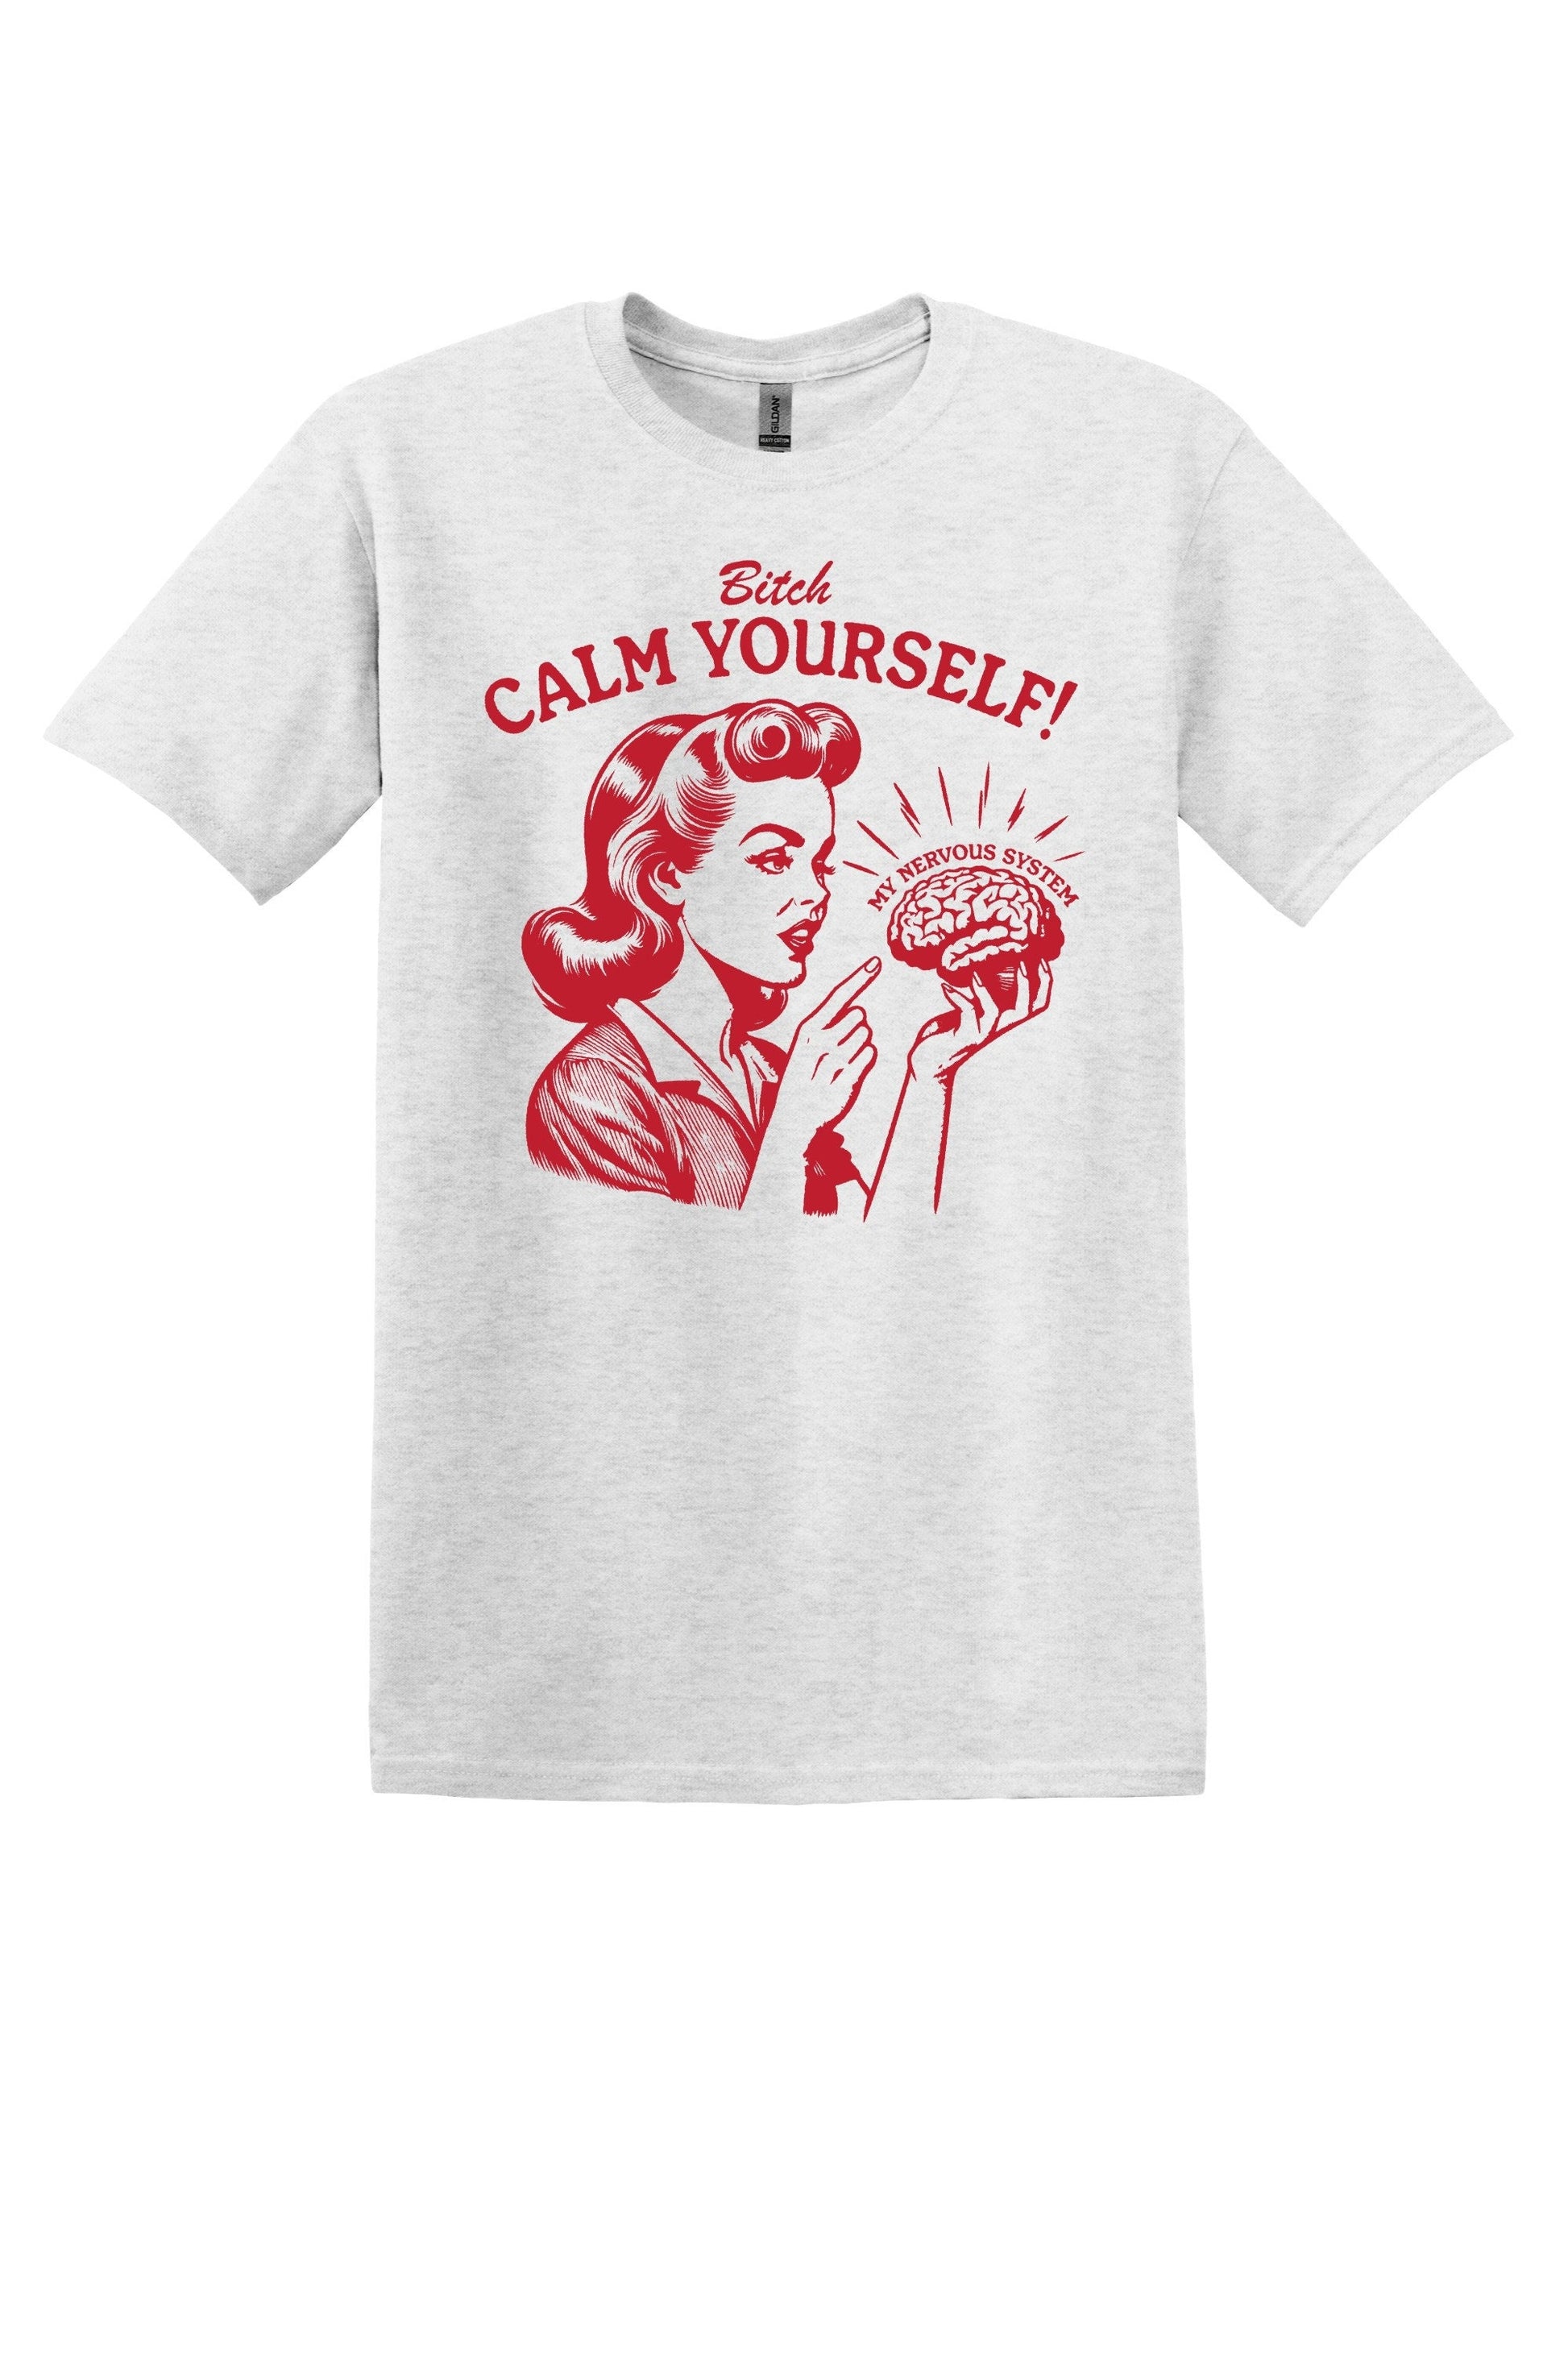 Bitch Calm Yourself My Nervous System Shirt Funny Shirt Mental Heath TShirt Ironic T Shirt Sarcastic Shirt trendy shirt